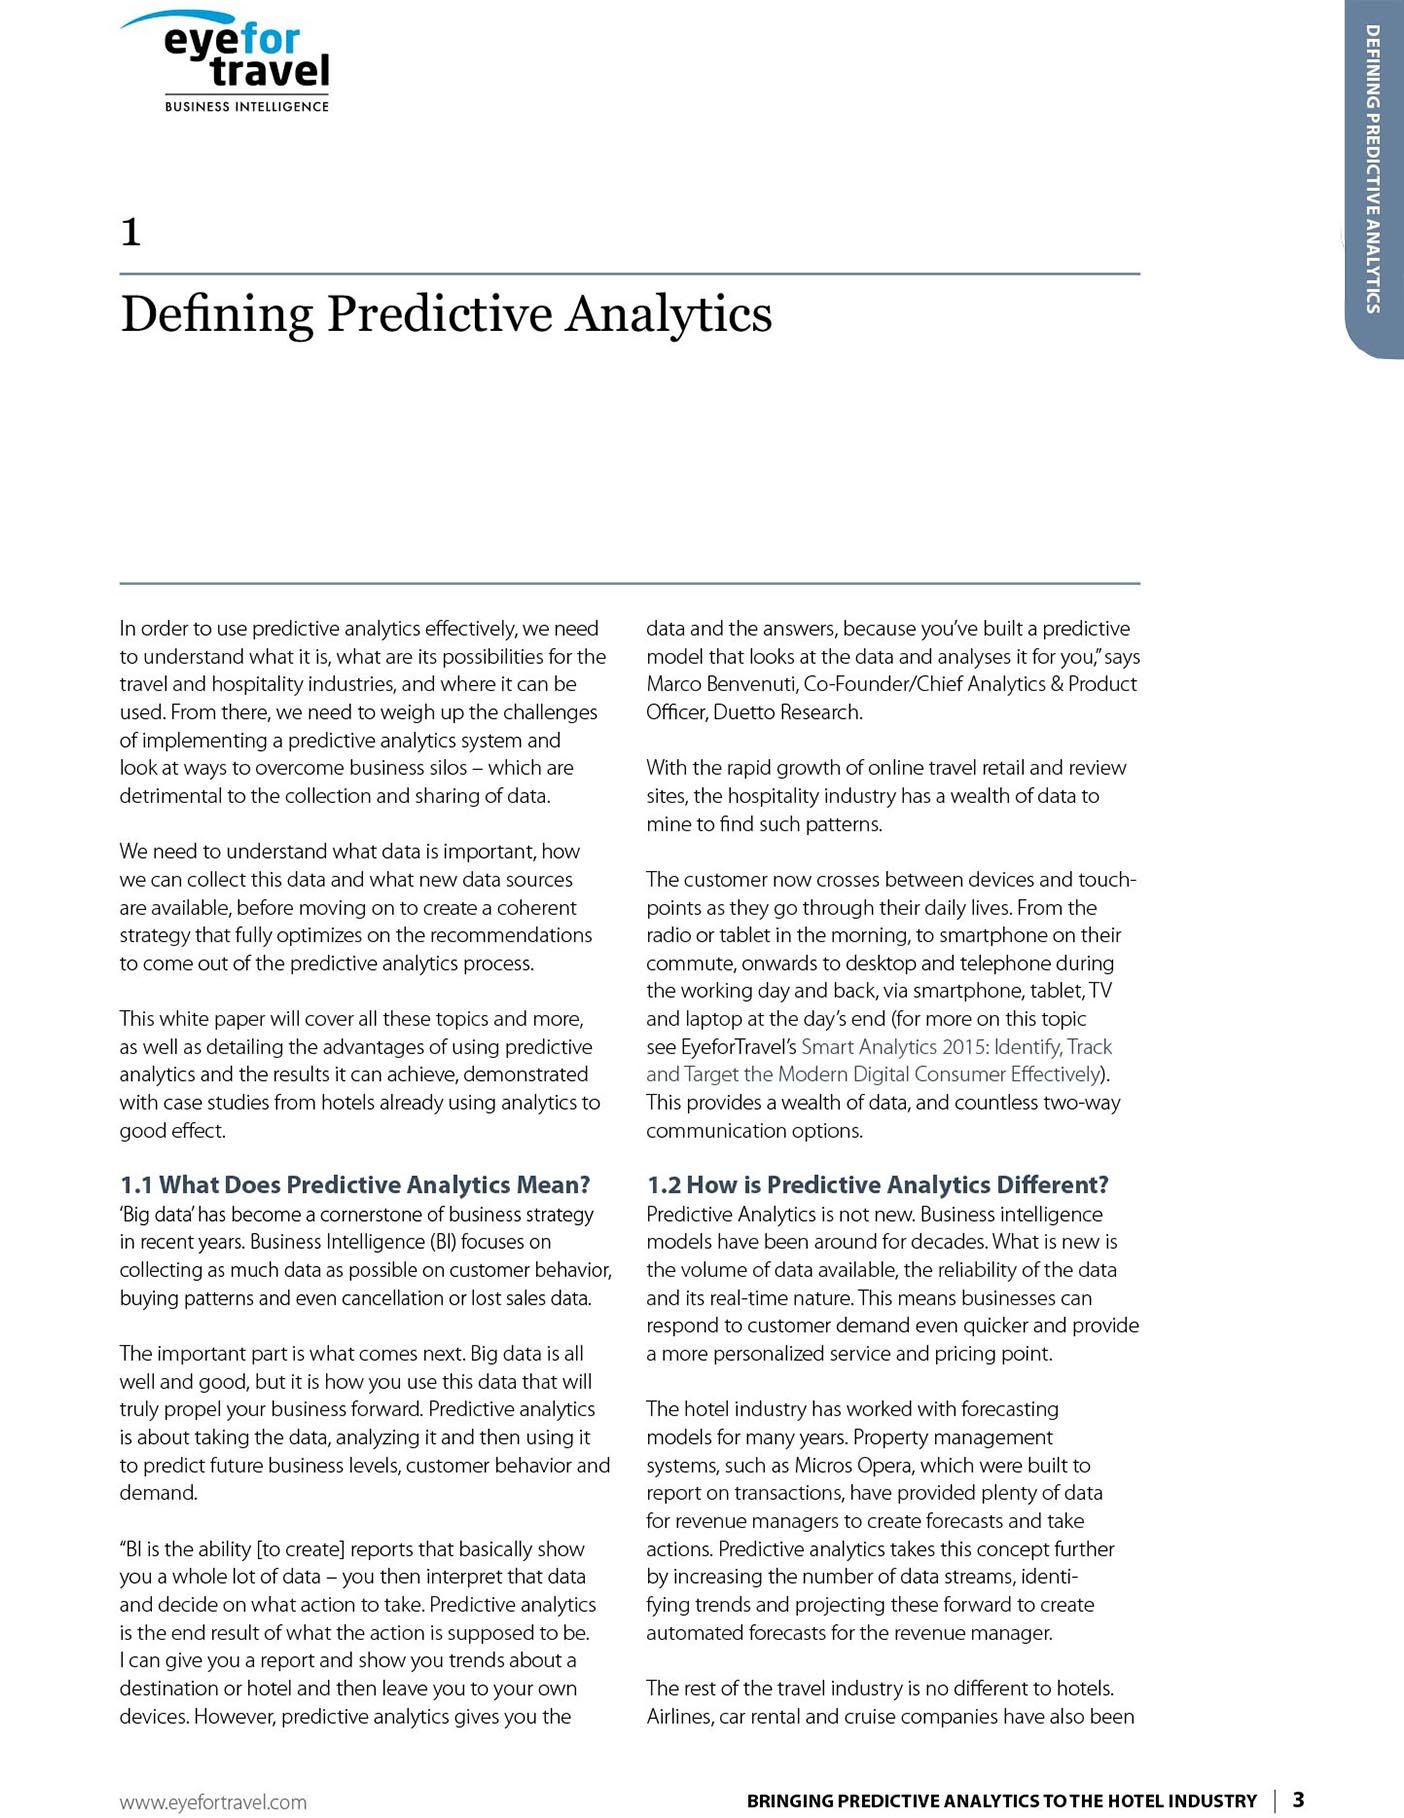 3-Bringing-Predictive-Analytics.jpg